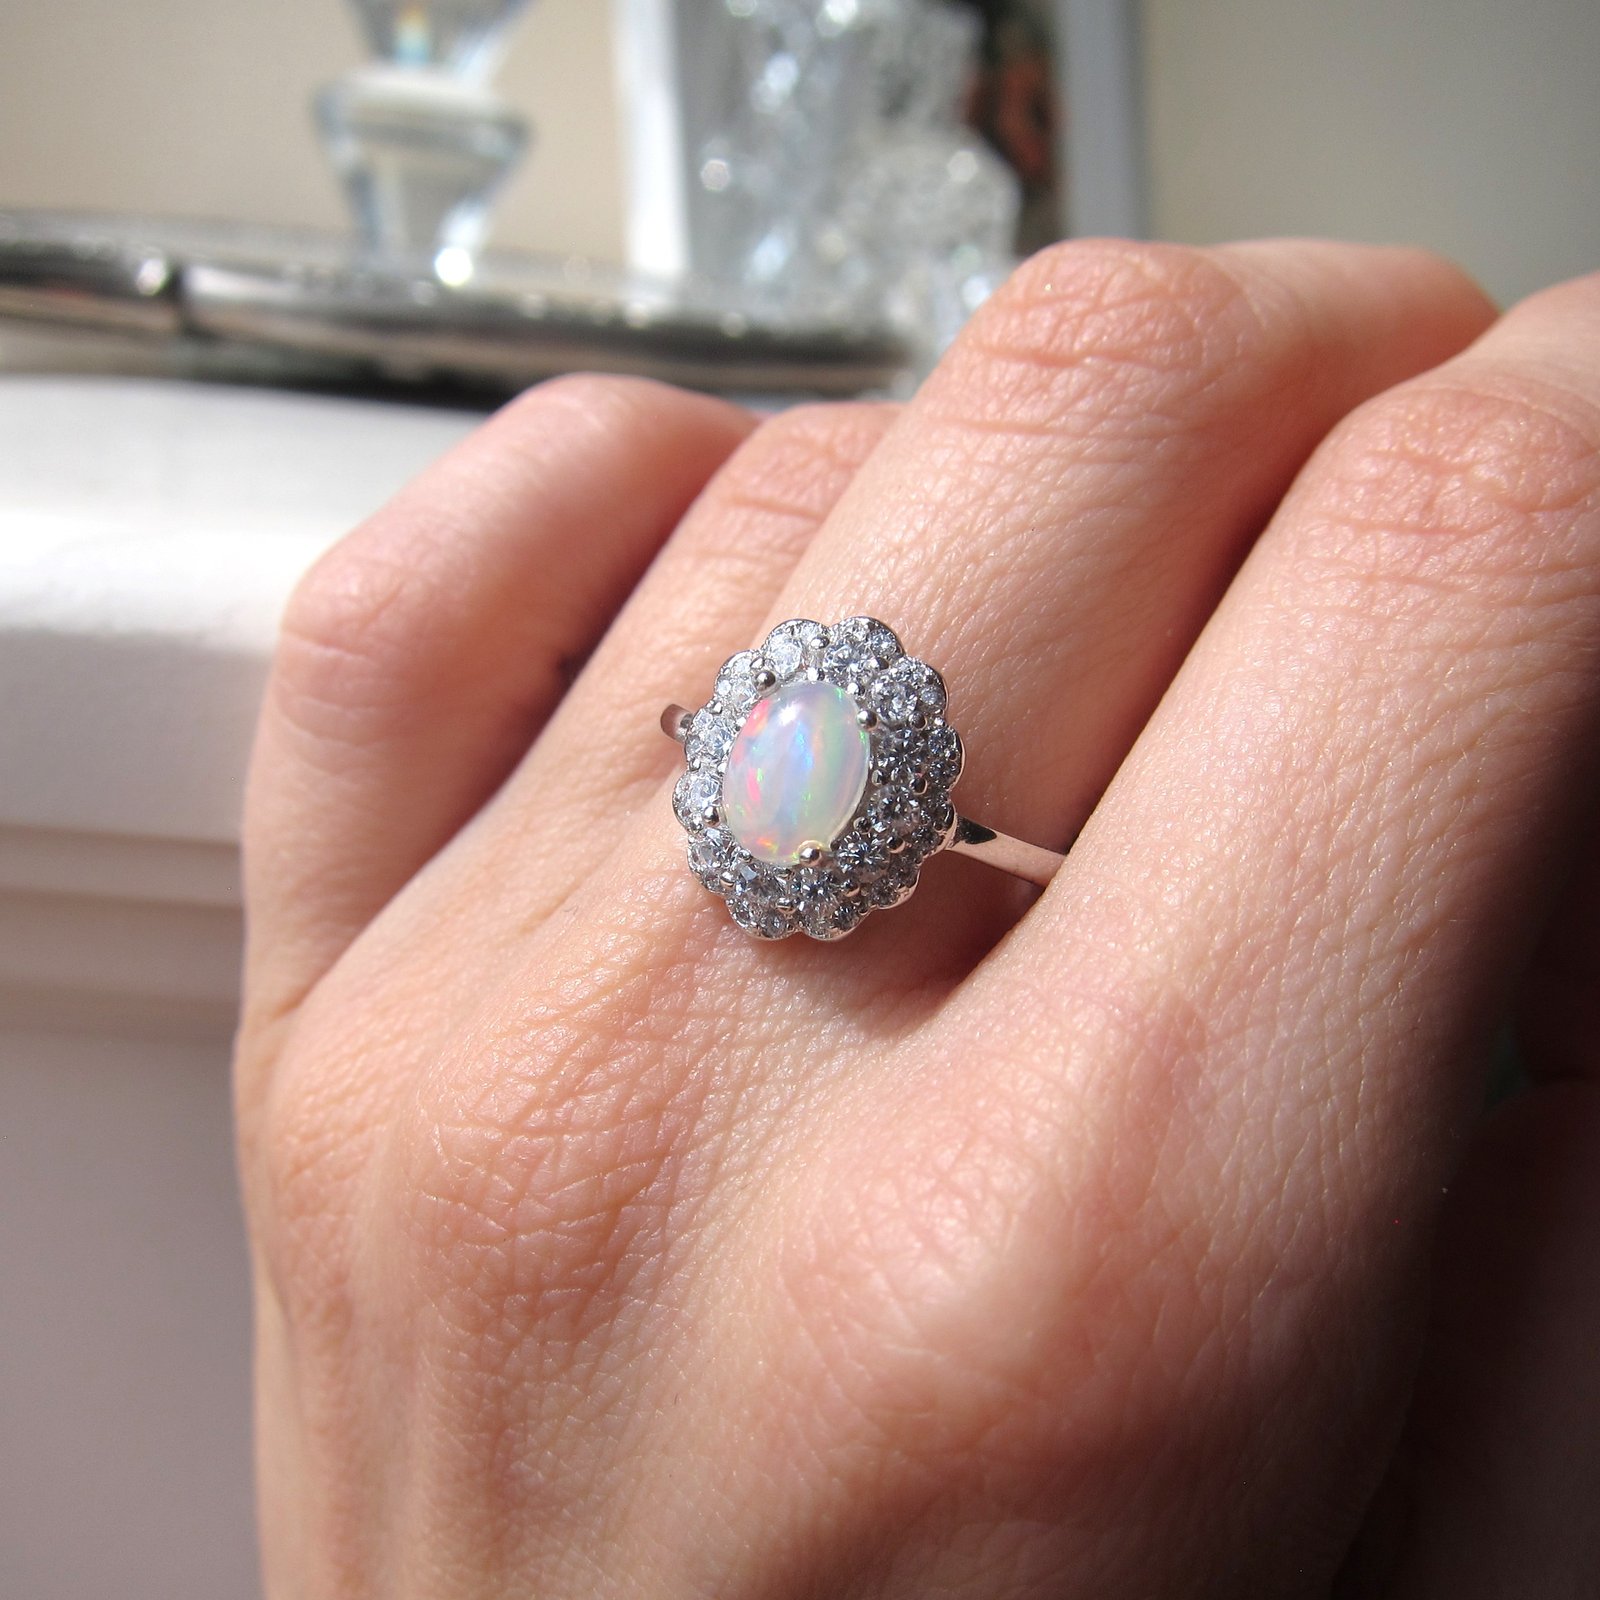 Monarque — Phoenix fire opal ring